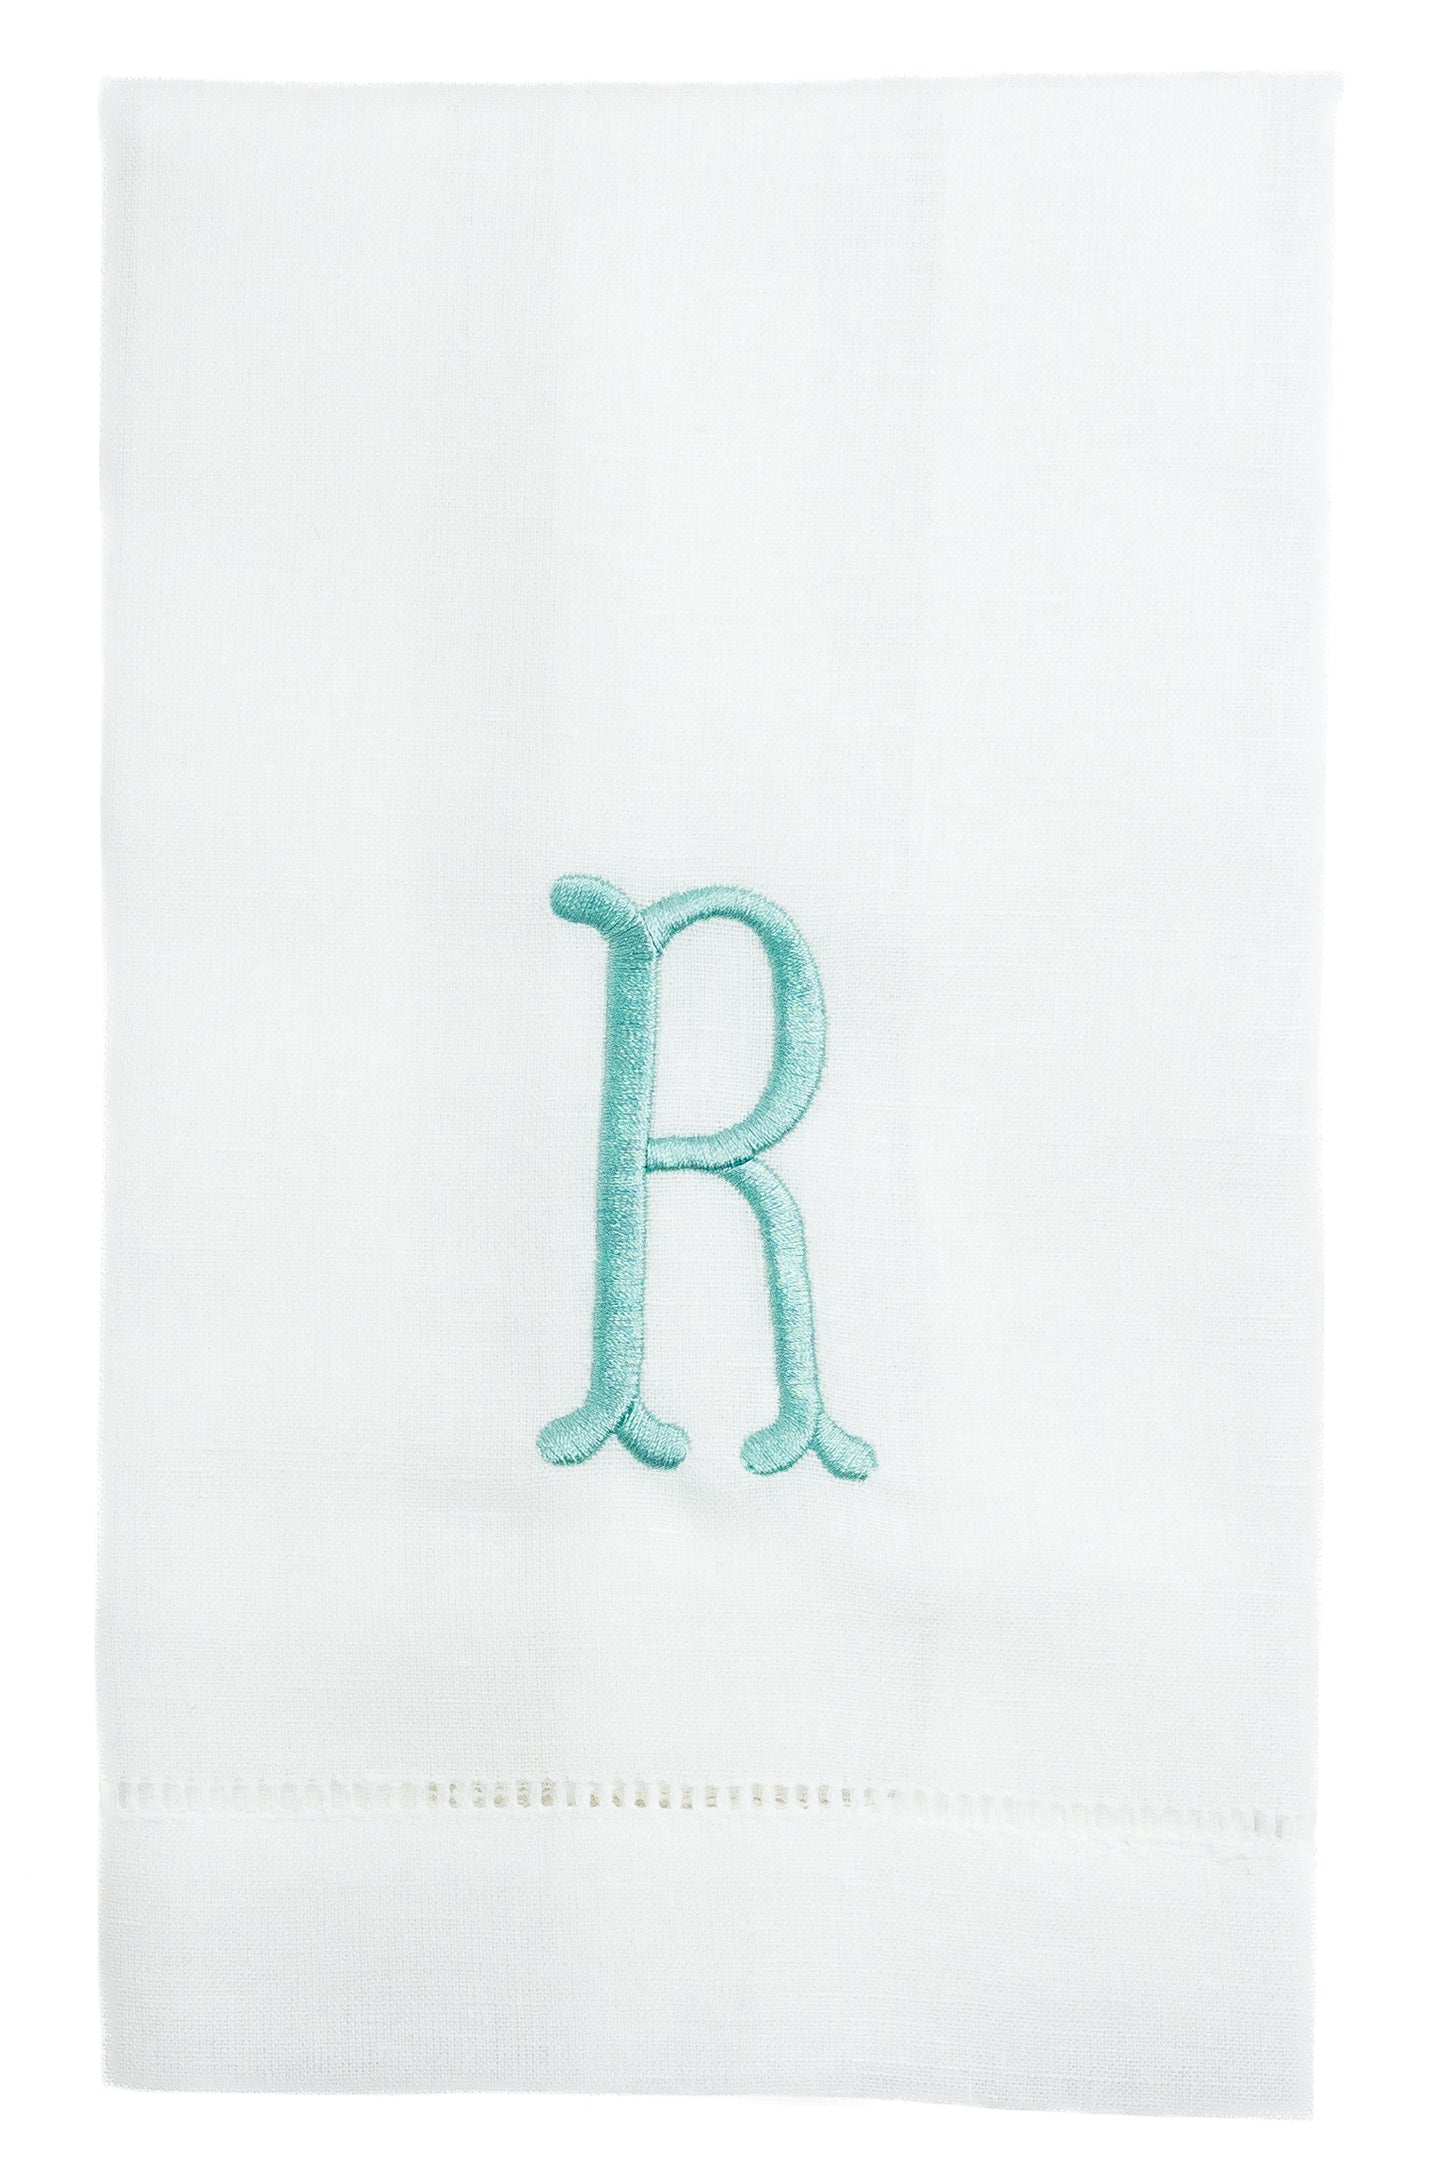 Embroidered Dinner Napkins with Fishtail Single Letter Monogram